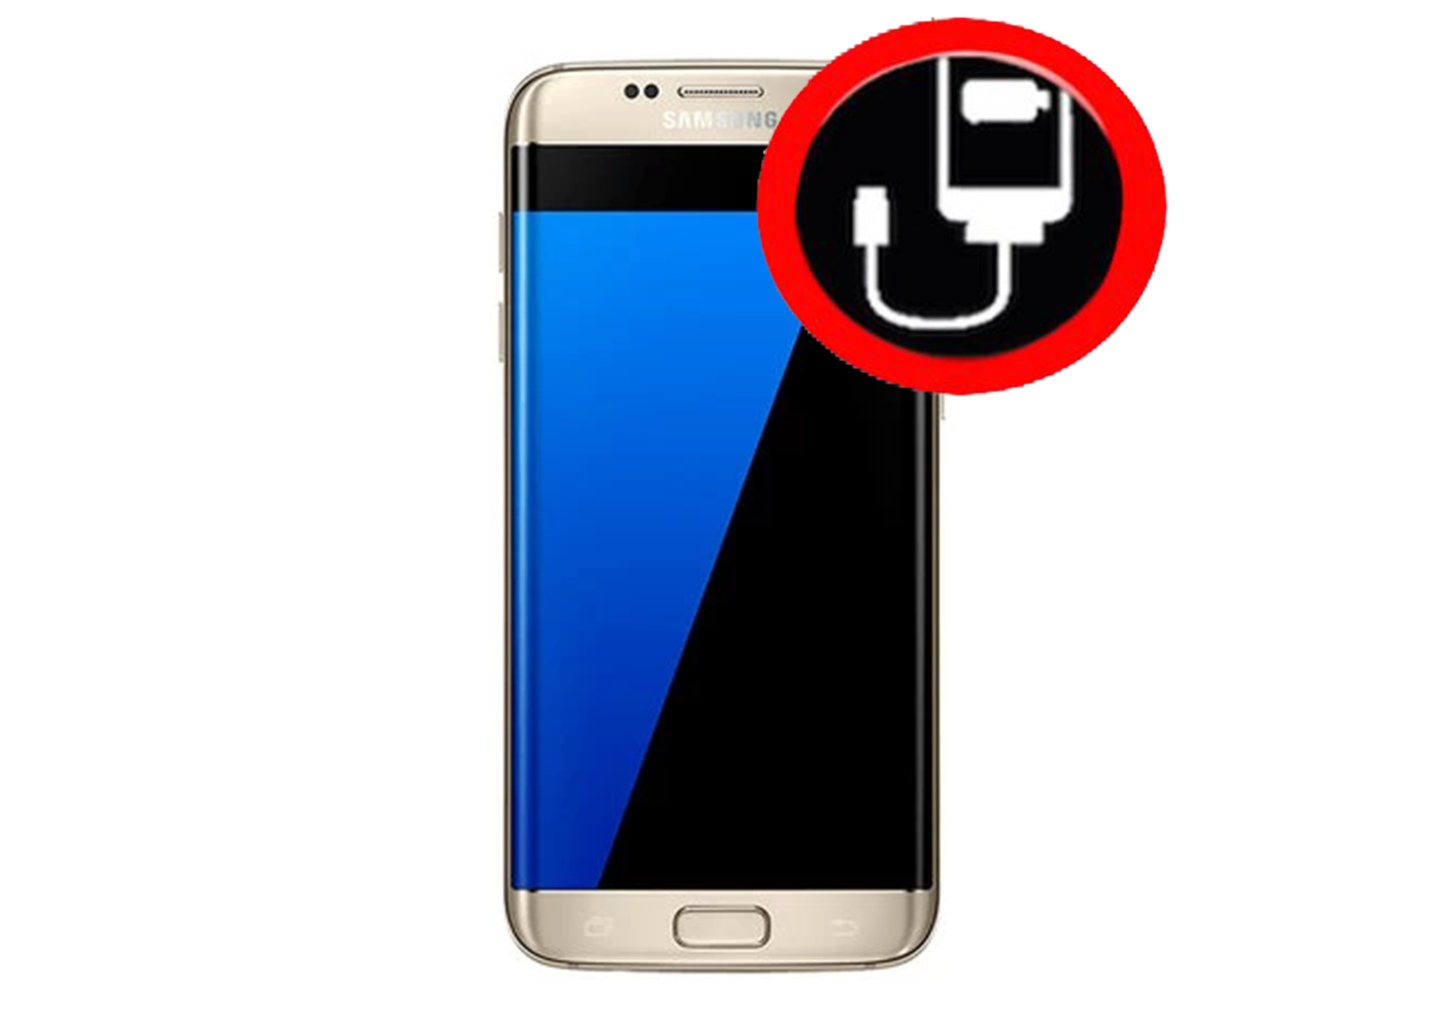 Samsung Galaxy S7 edge Charging Port Repair Service